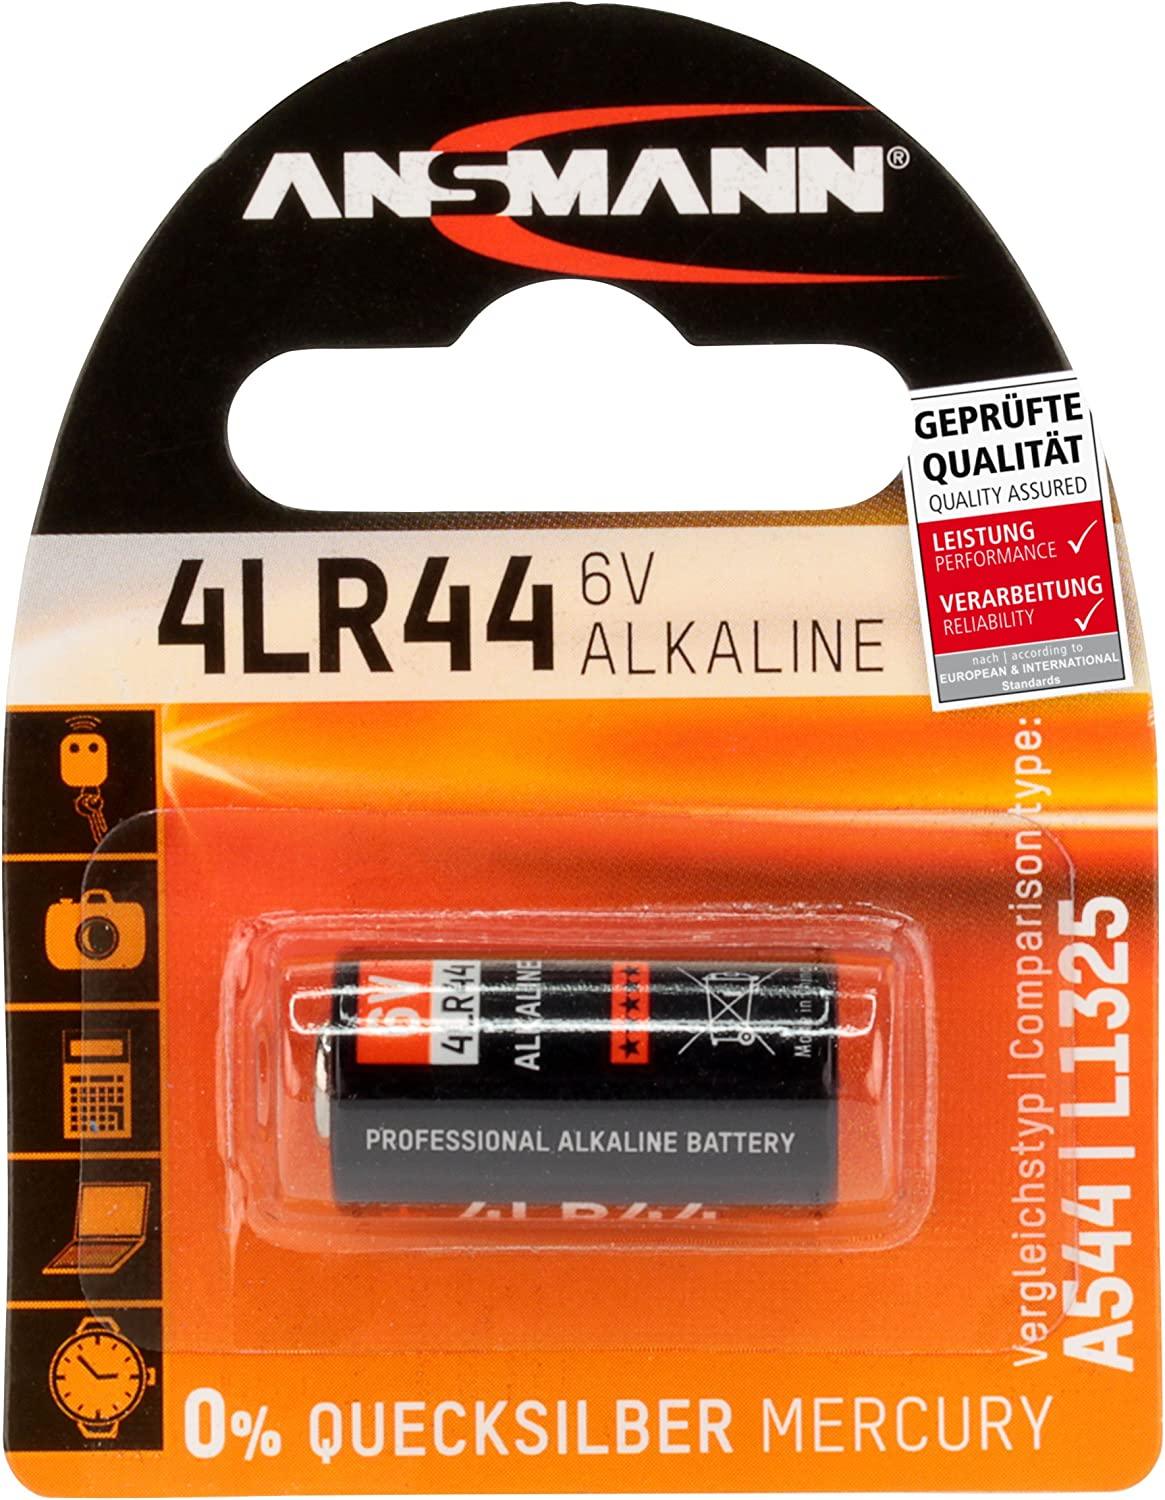 Ansmann PX28 / A544 / 4LR44 6V Alkaline Battery